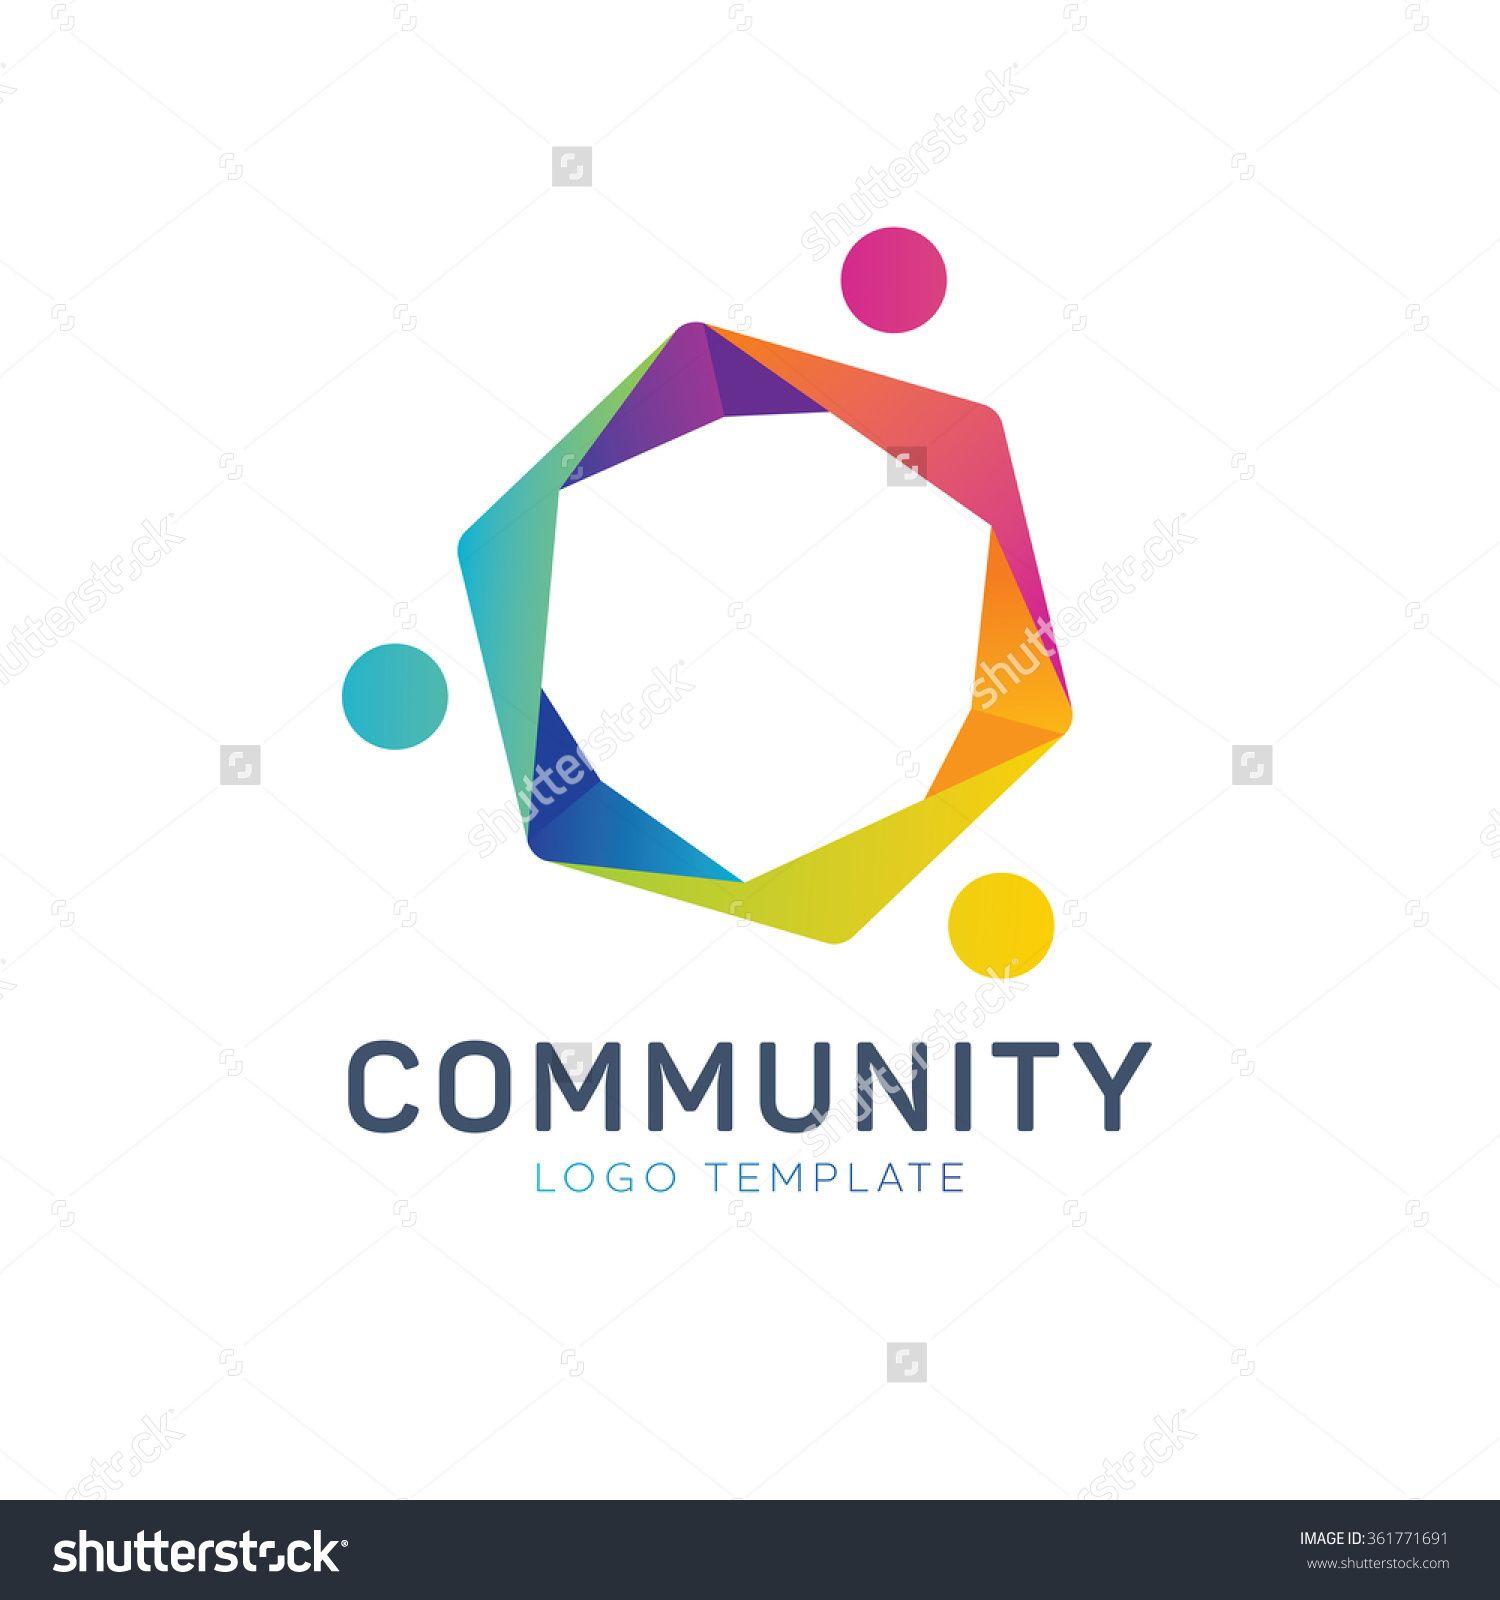 Community Logo - Community logo. Teamwork logo. Social logo. Partnership logo ...